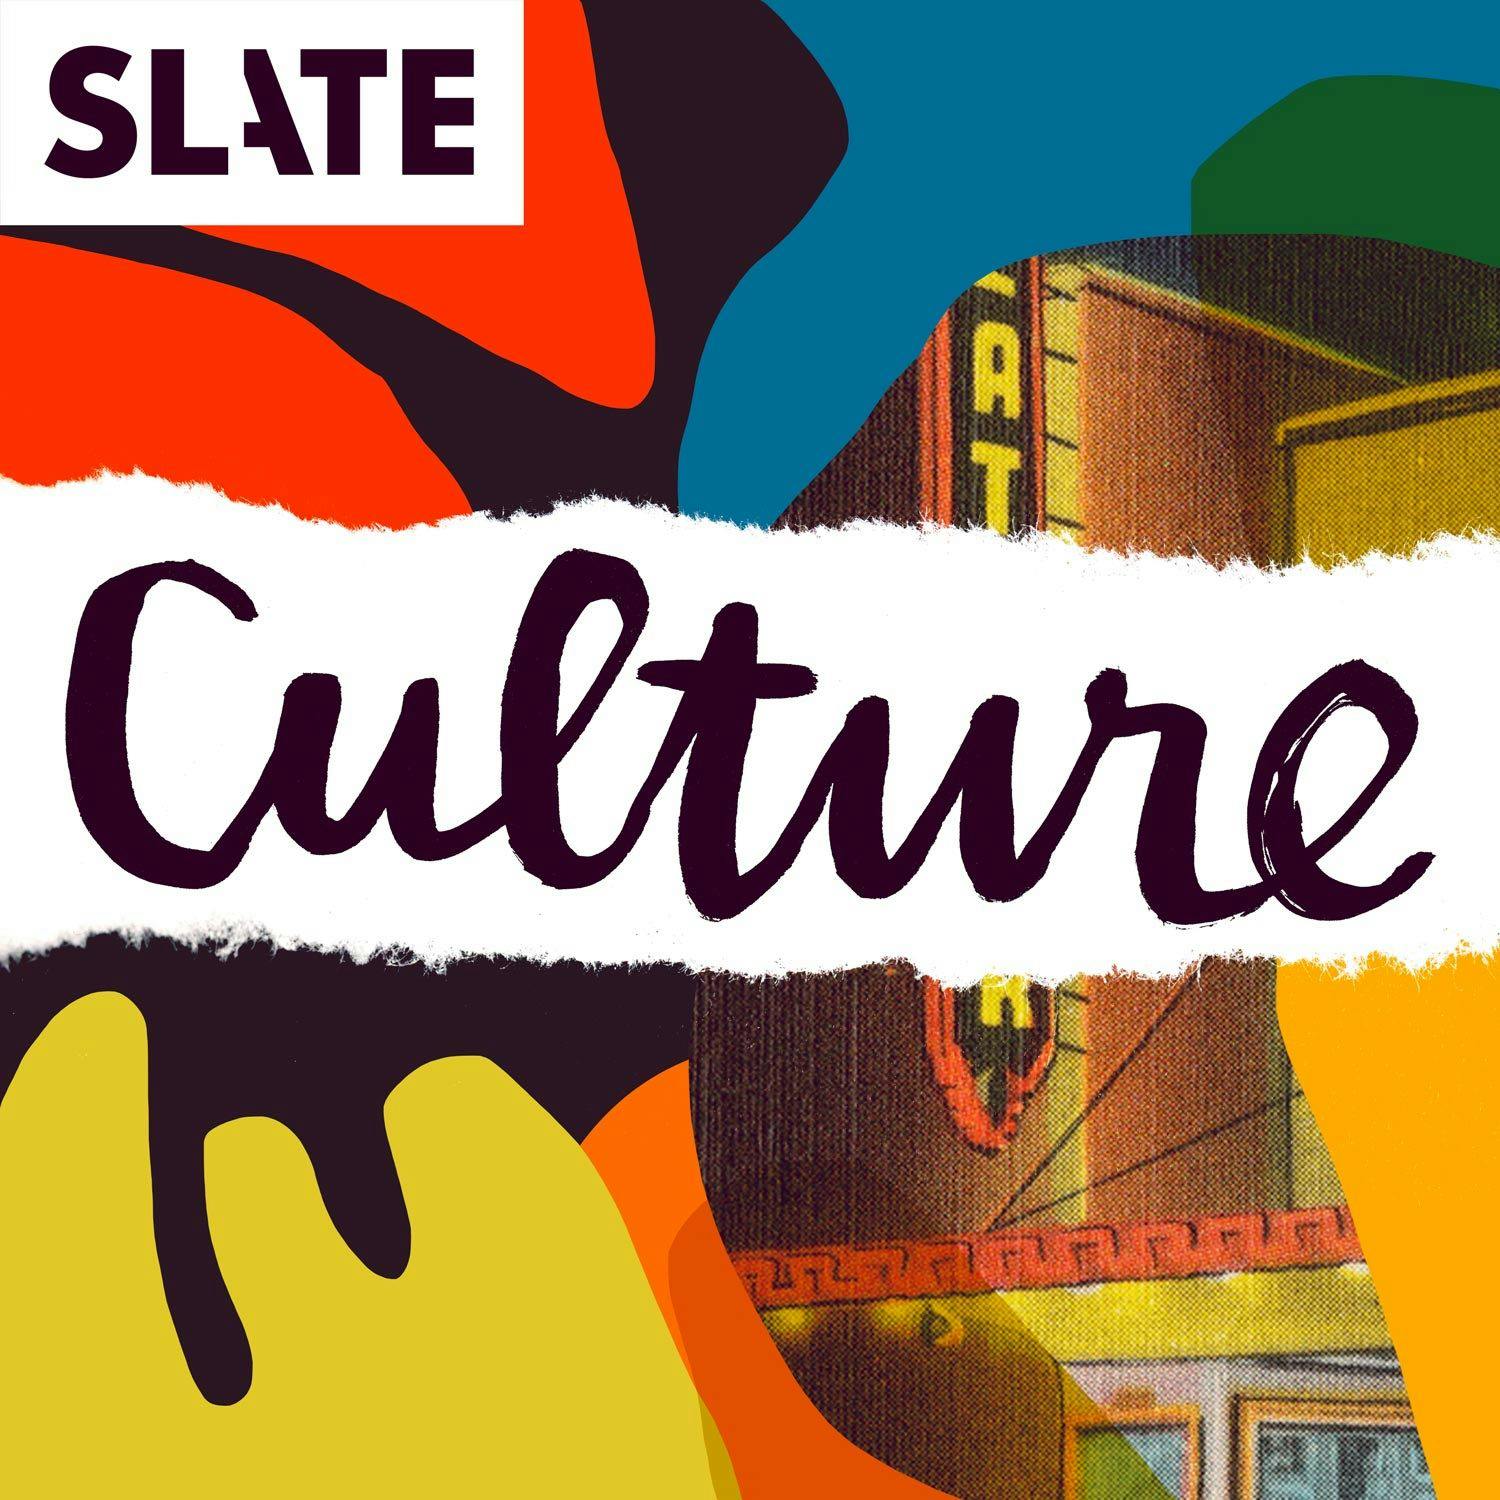 Slate Culture - Podcast